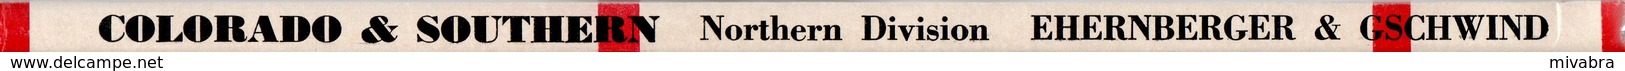 COLORADO & SOUTHERN NORTHERN DIVISION - J. L. EHERNBERGER & G. GSCHWIND - (LOCOMOTIVES EISENBAHNEN CHEMIN DE FER VAPEUR) - Transportes